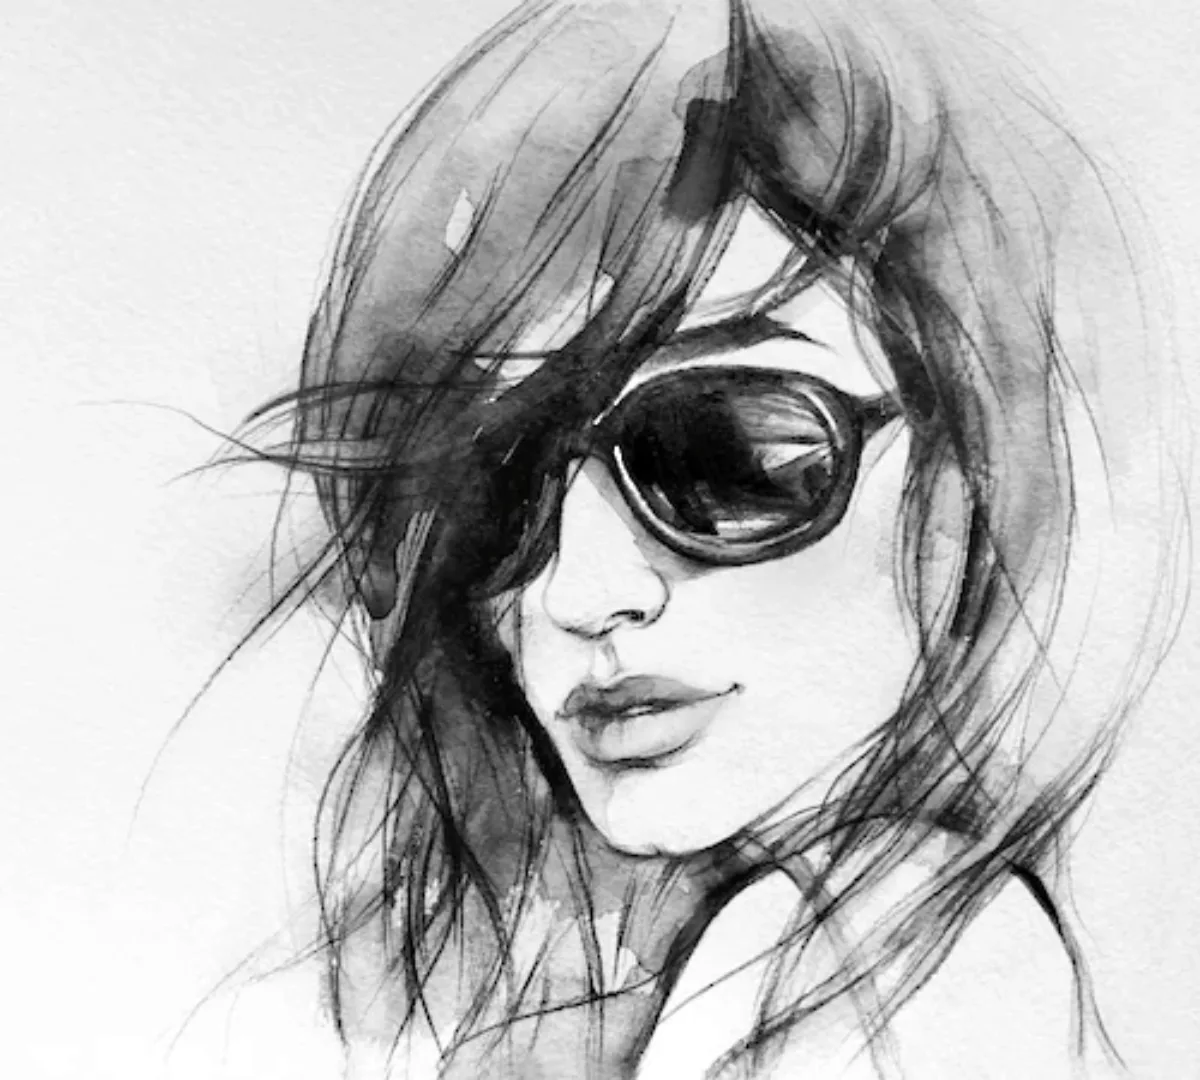 Wall-Art Vliestapete »I wear my sunglasses« günstig online kaufen